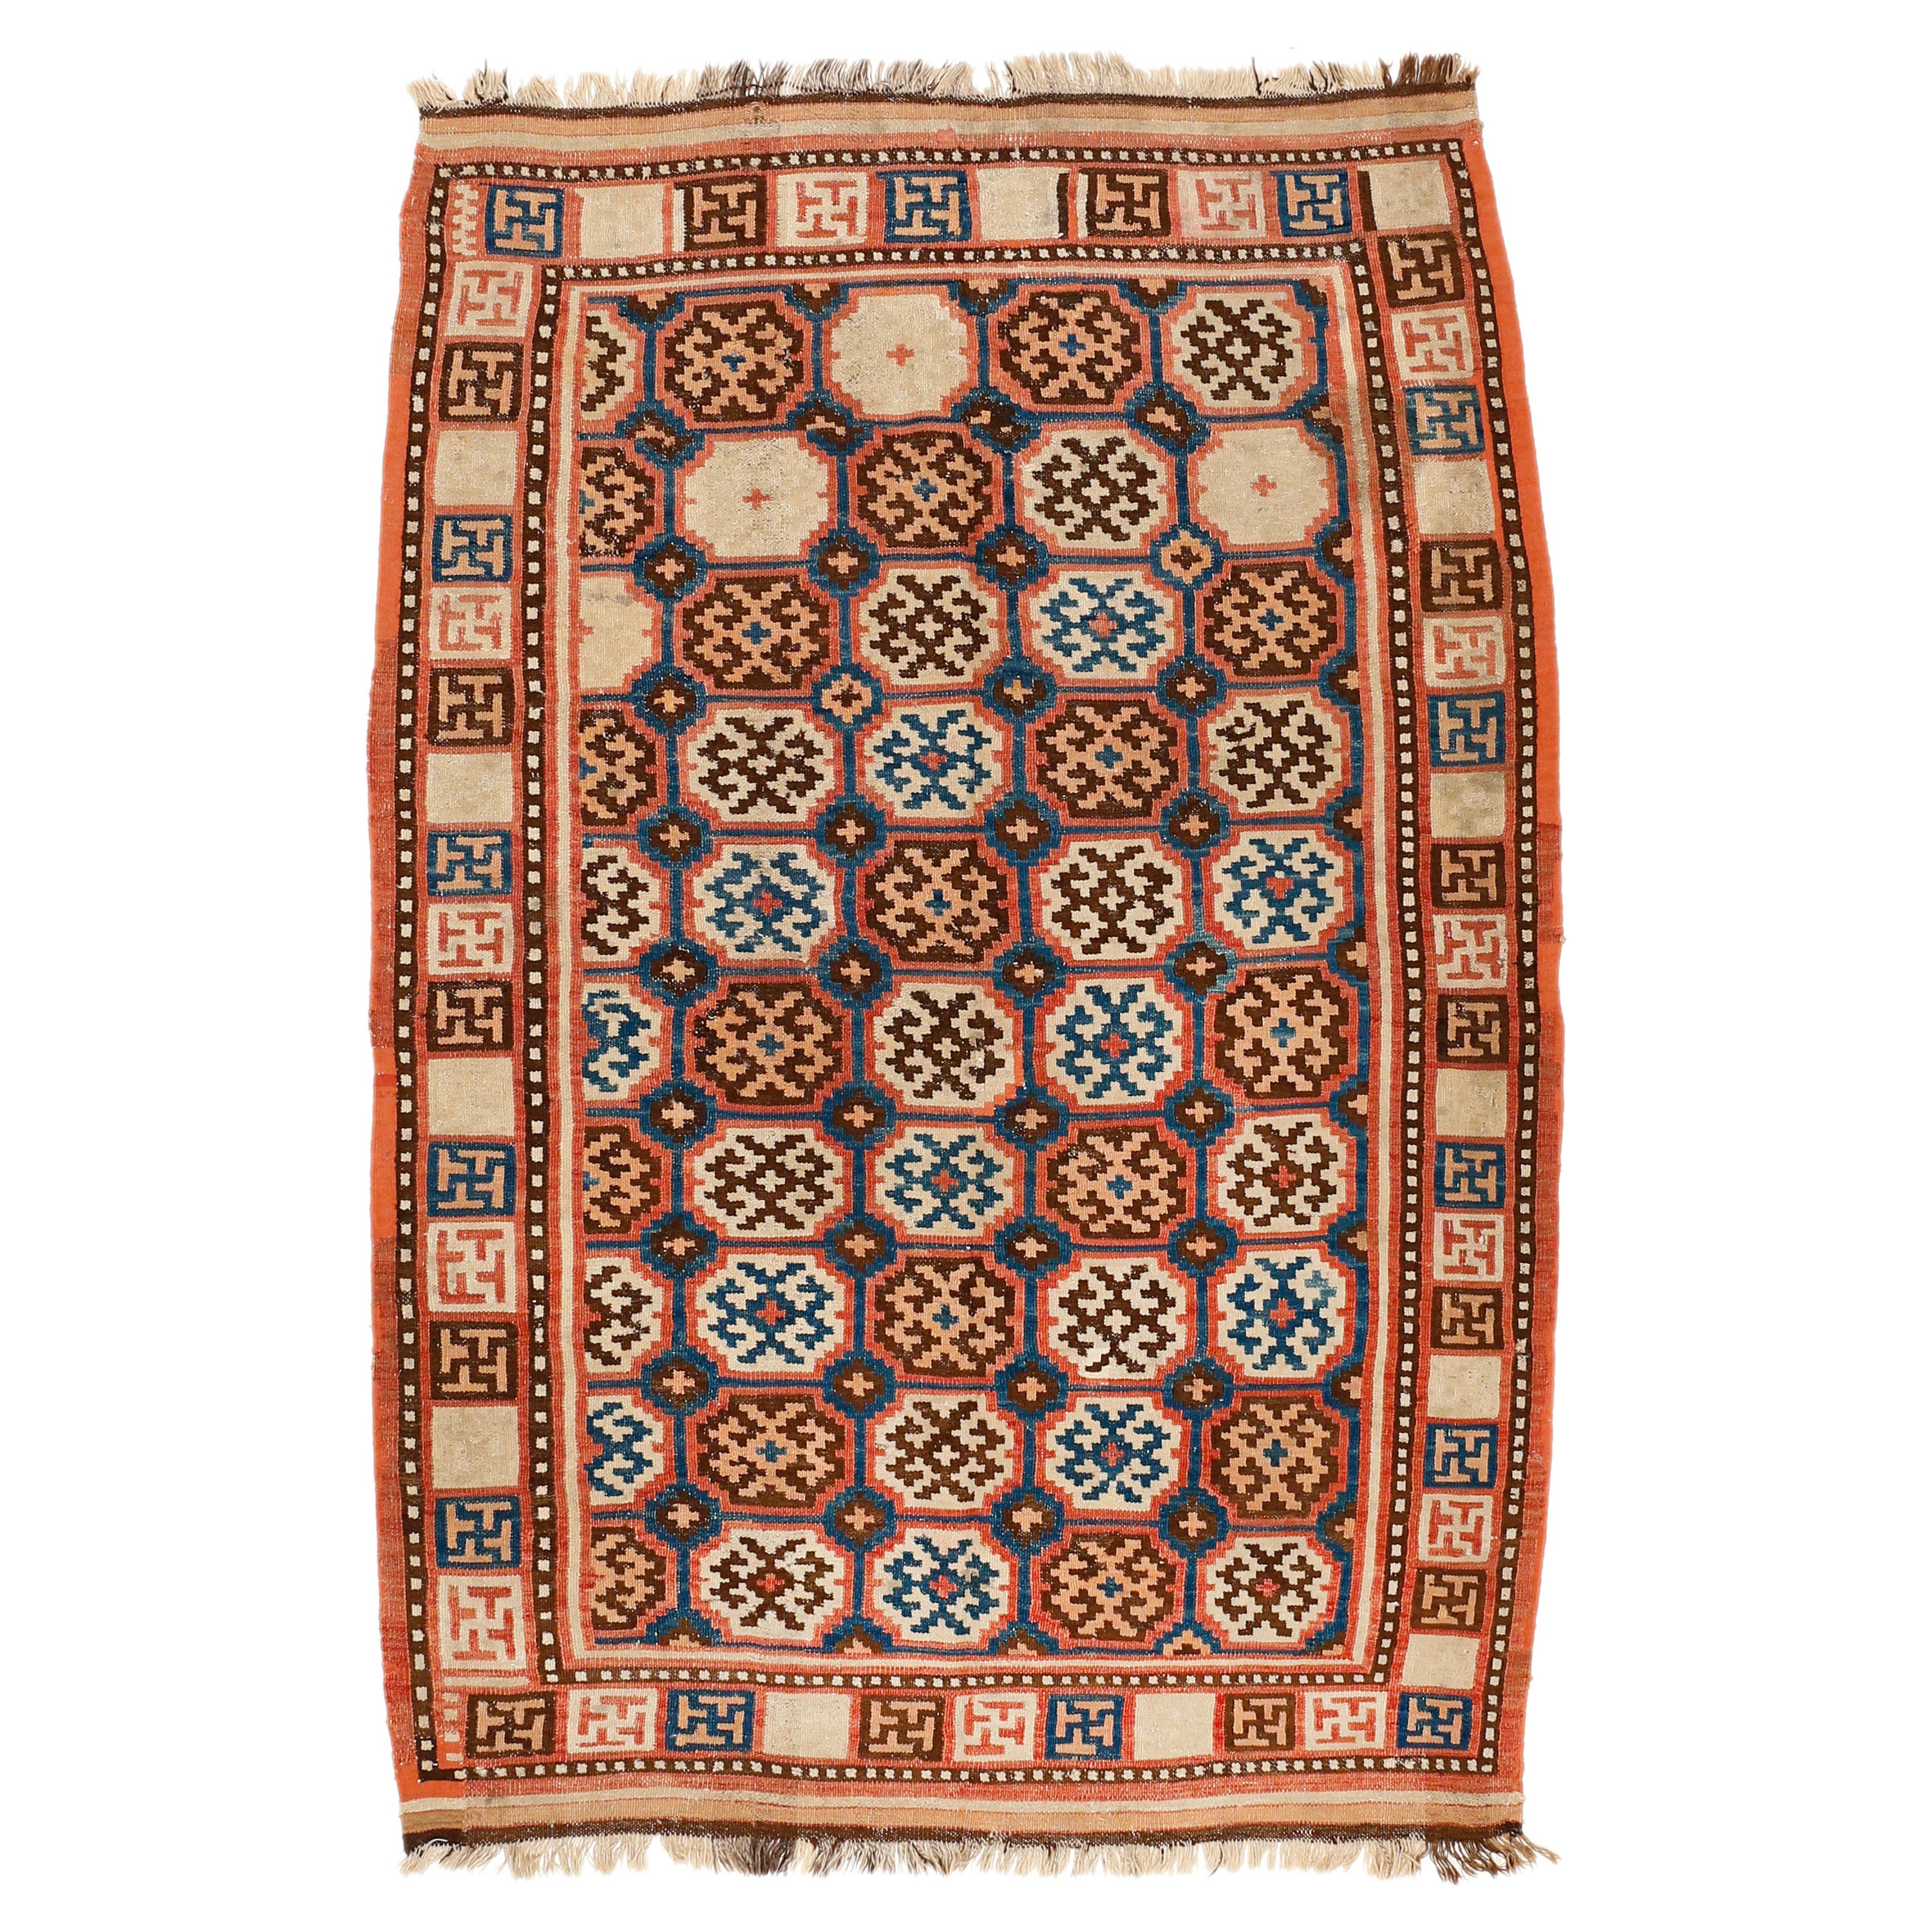 Rare and Unusual Antique Khotan Kilim Rug